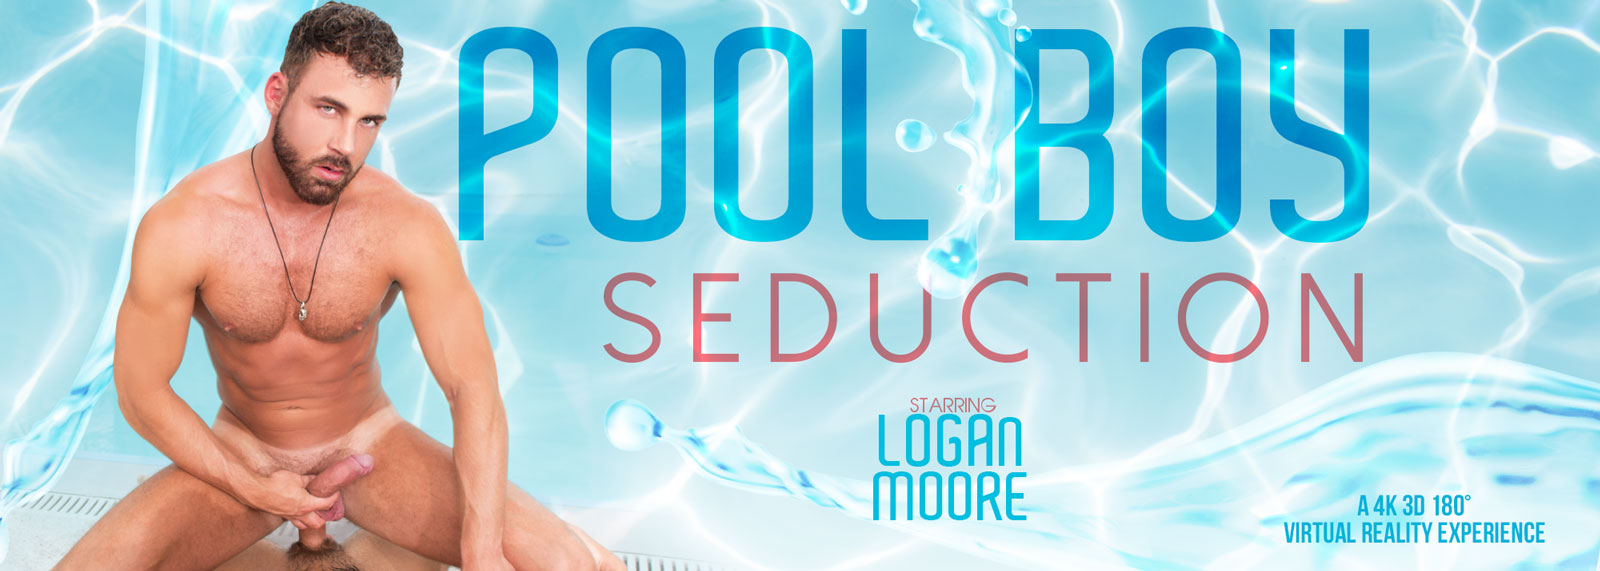 Pool Boy Seduction - VR Porn Video, Starring Logan Moore VR